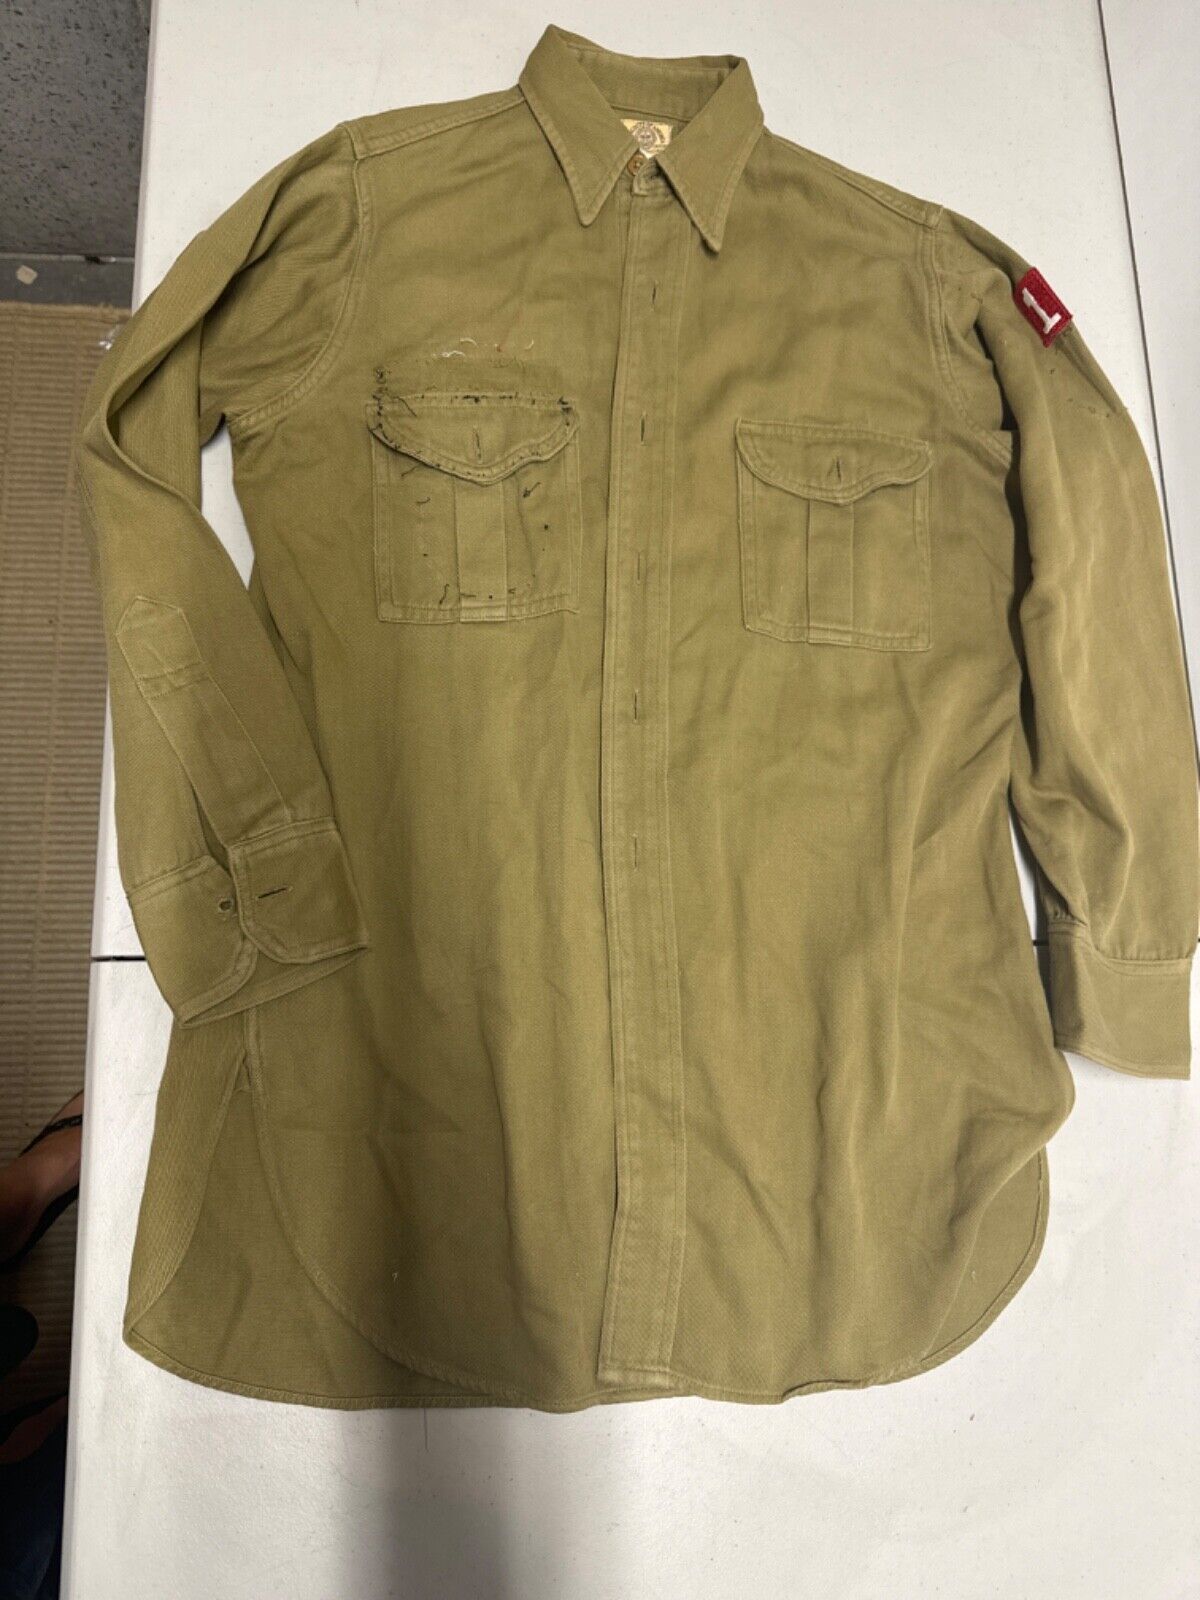 BSA vintage uniform shirt long sleeve olive green